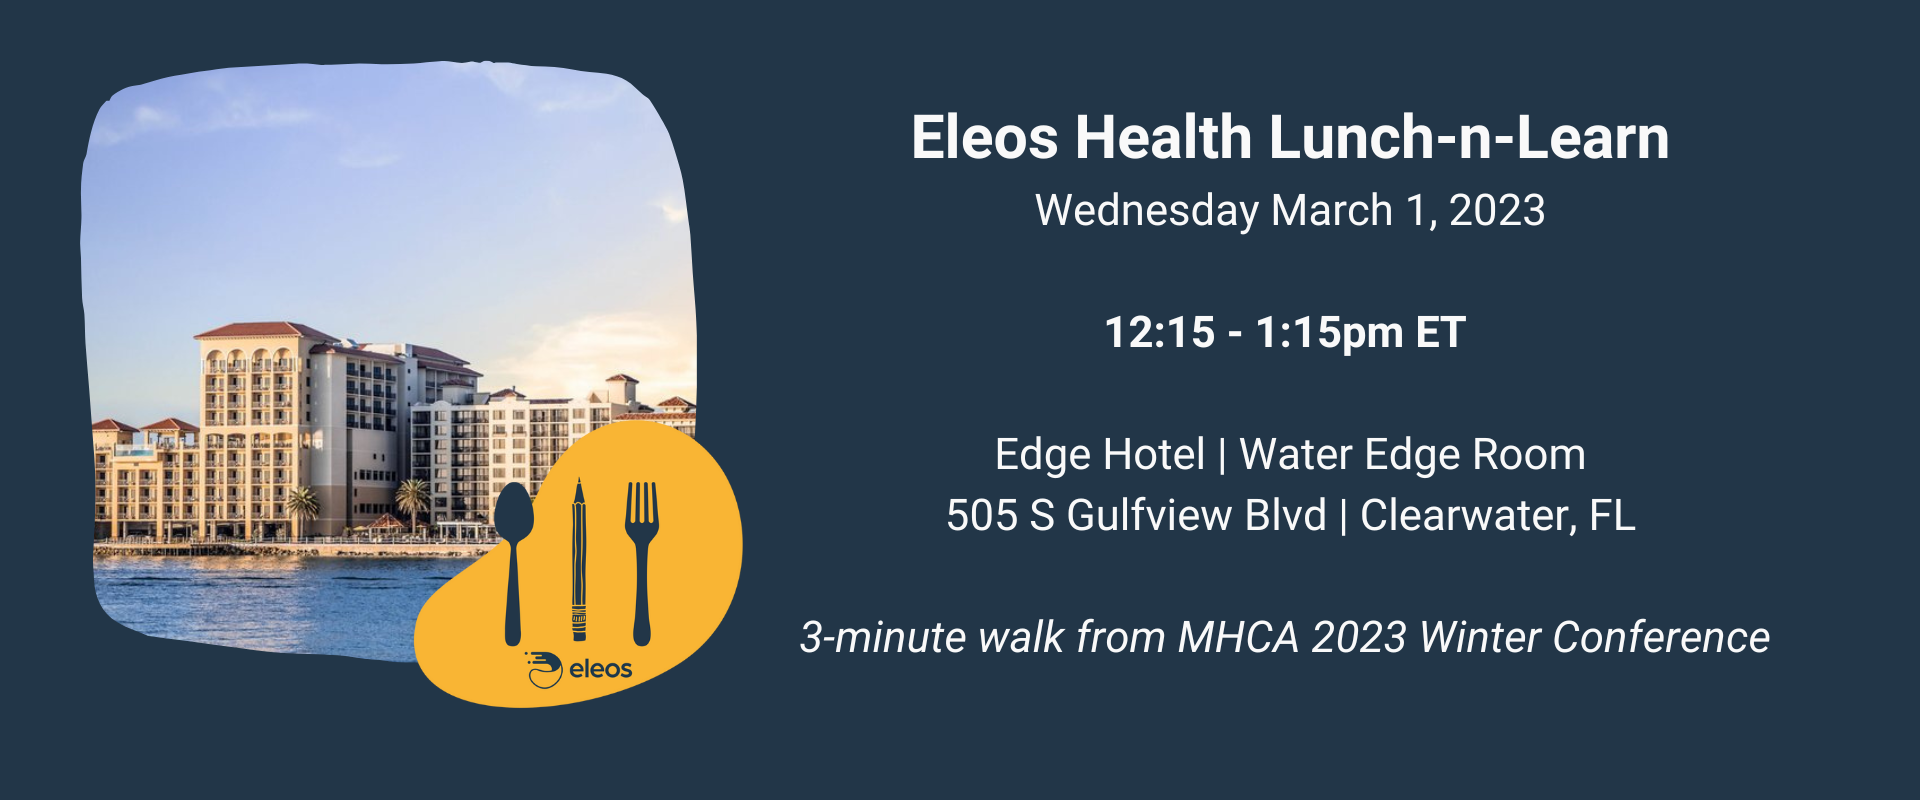 Eleos Health LunchnLearn MHCA 2023 Winter Conference